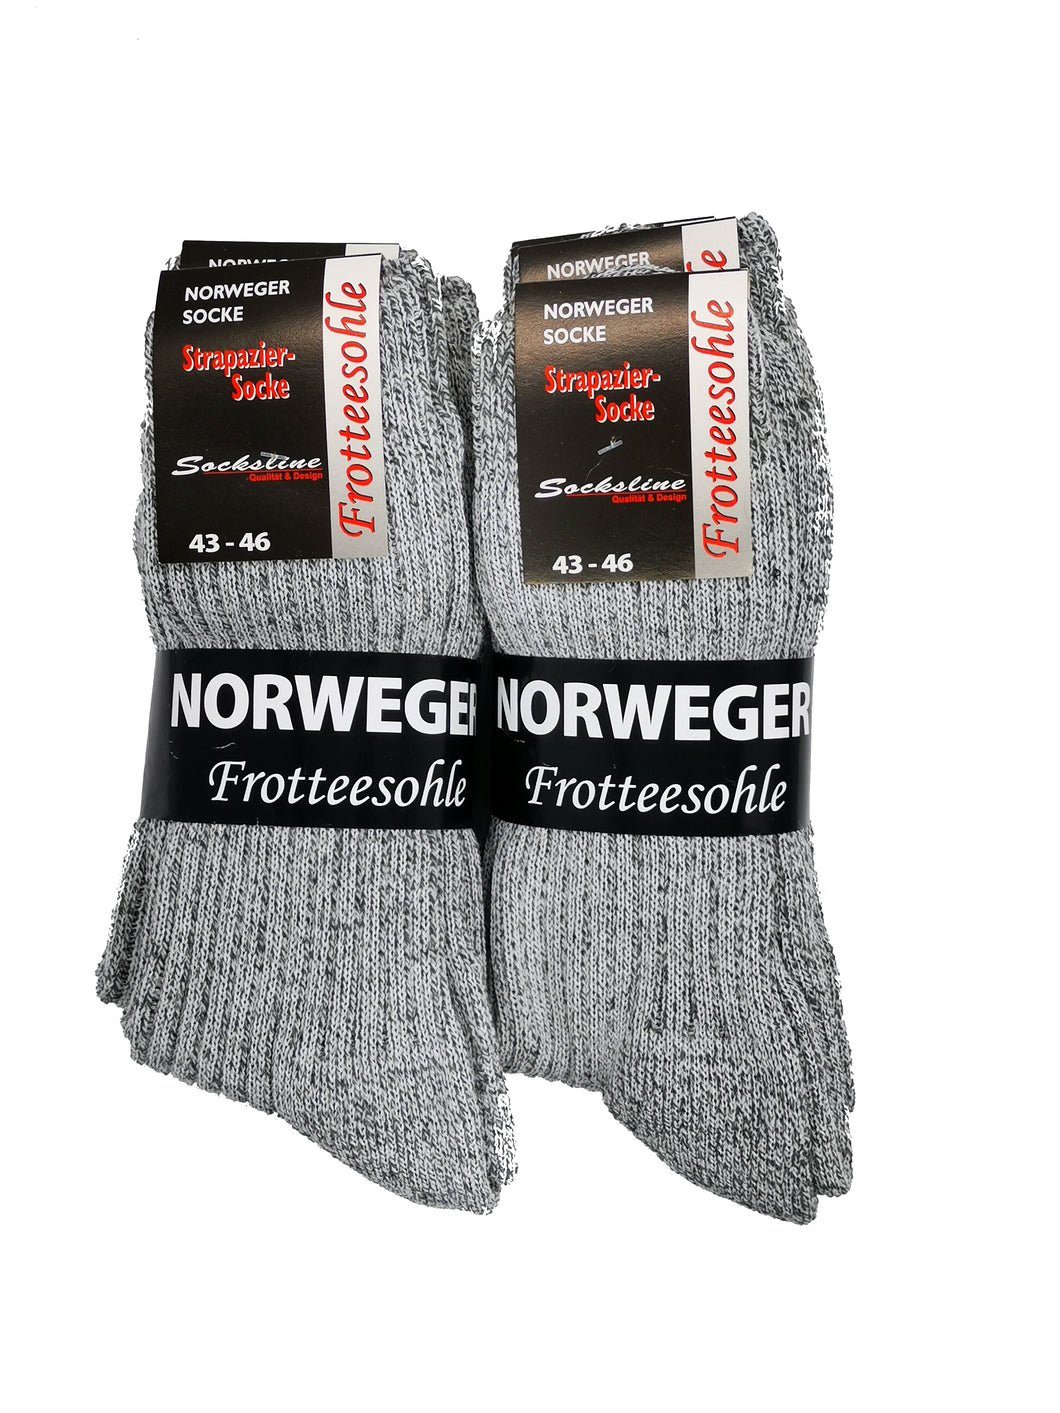 Norweger Socken mit Frotteesohle Herren 72% Wolle wärmend